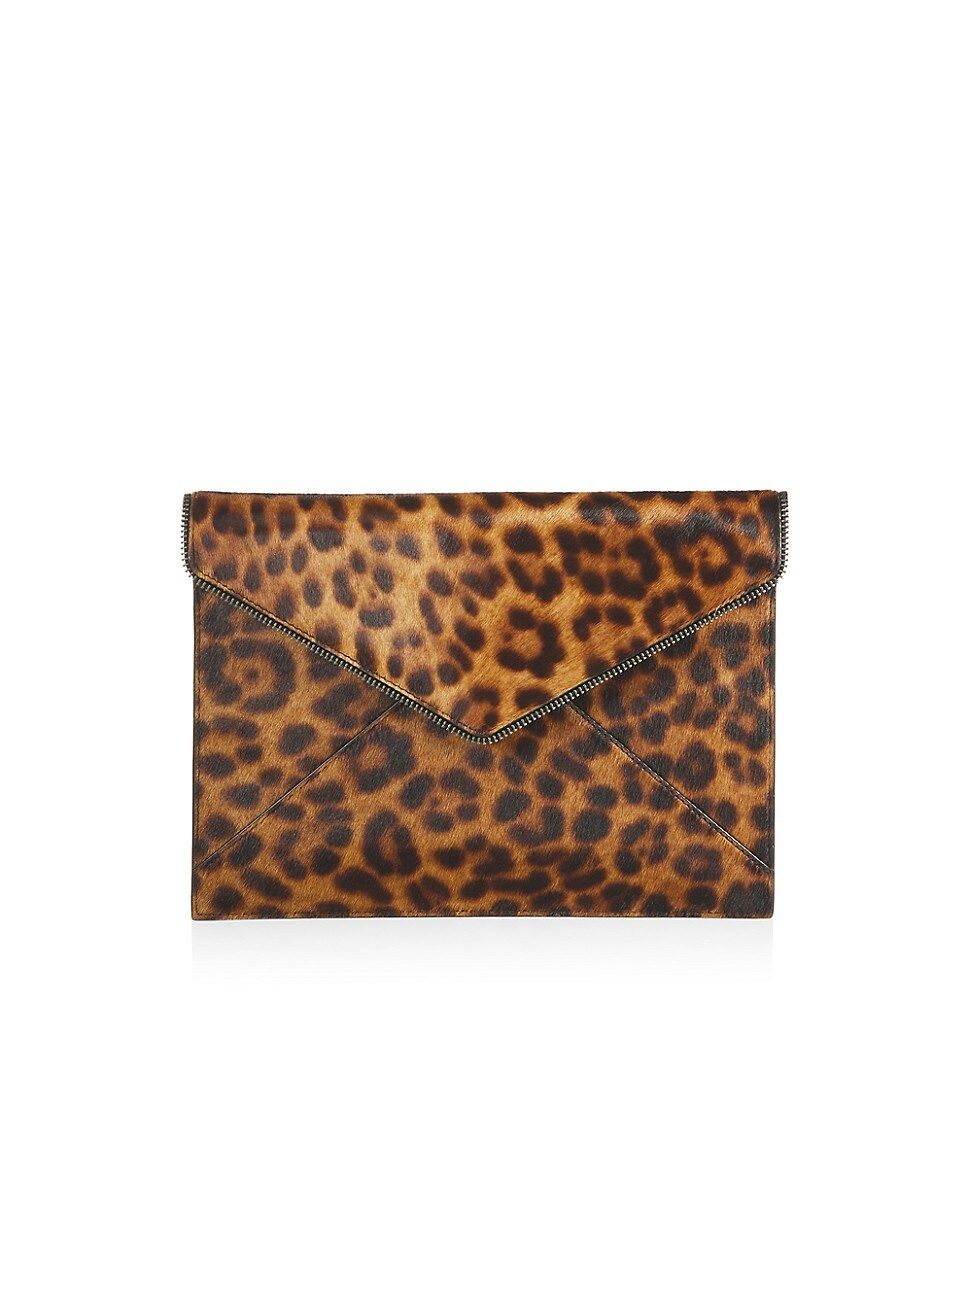 Rebecca Minkoff Leo Leopard-Print Calf Hair Envelope Clutch | Saks Fifth Avenue